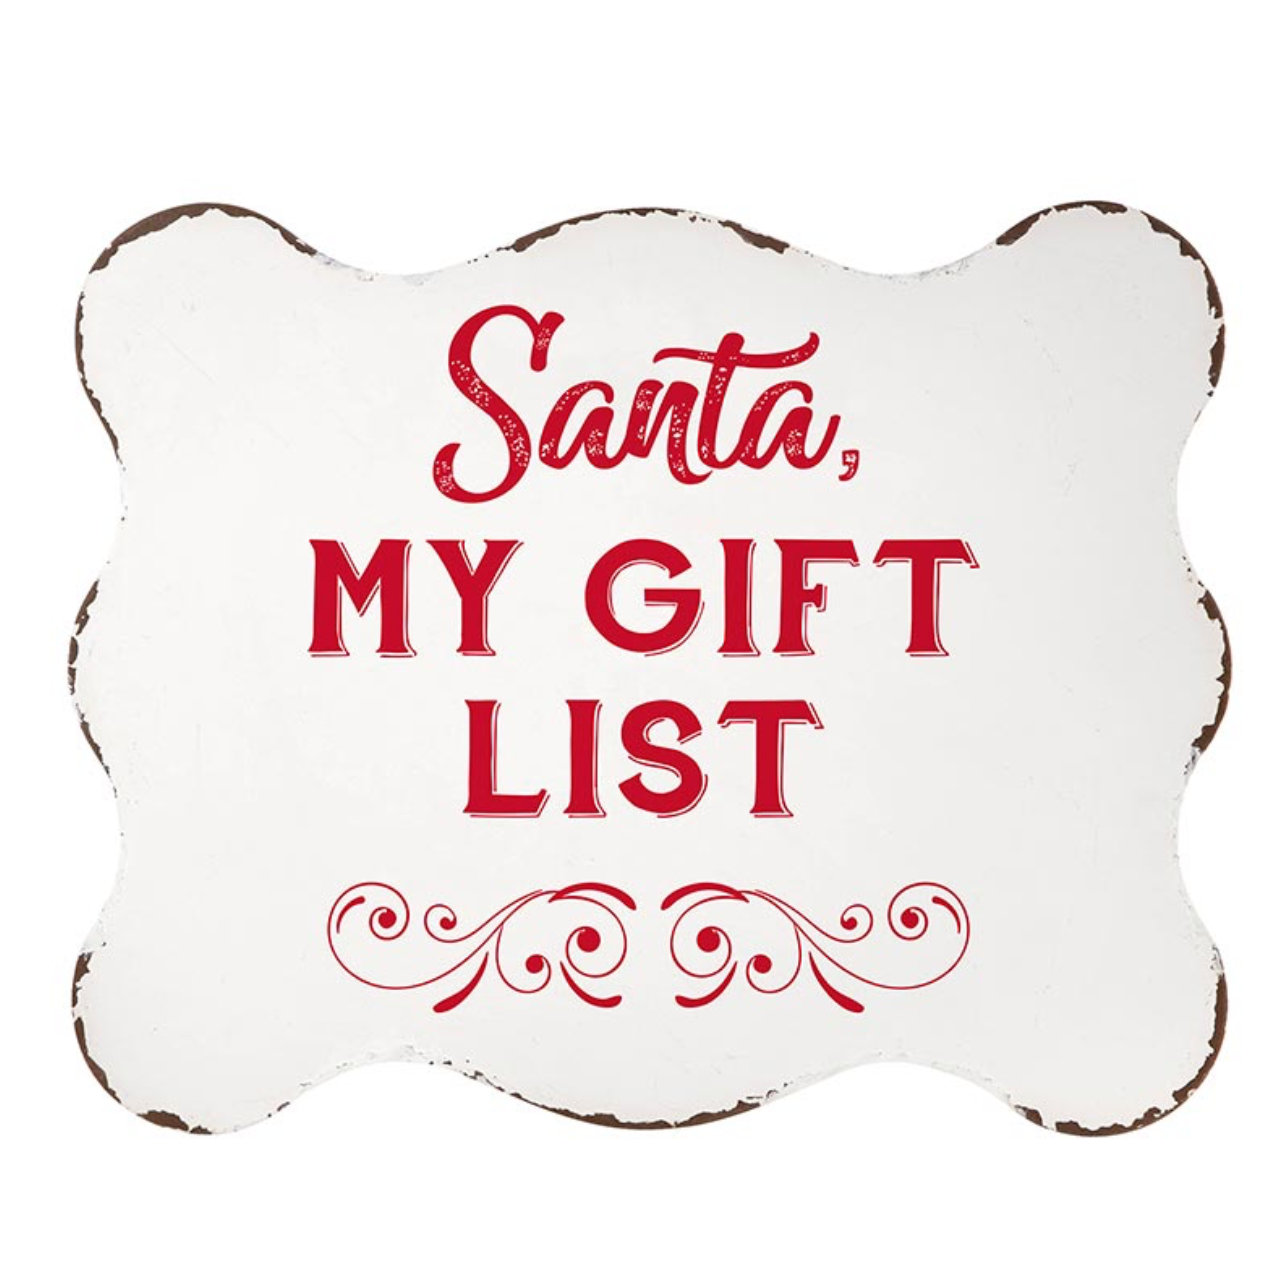 Santa gift list, metal sign